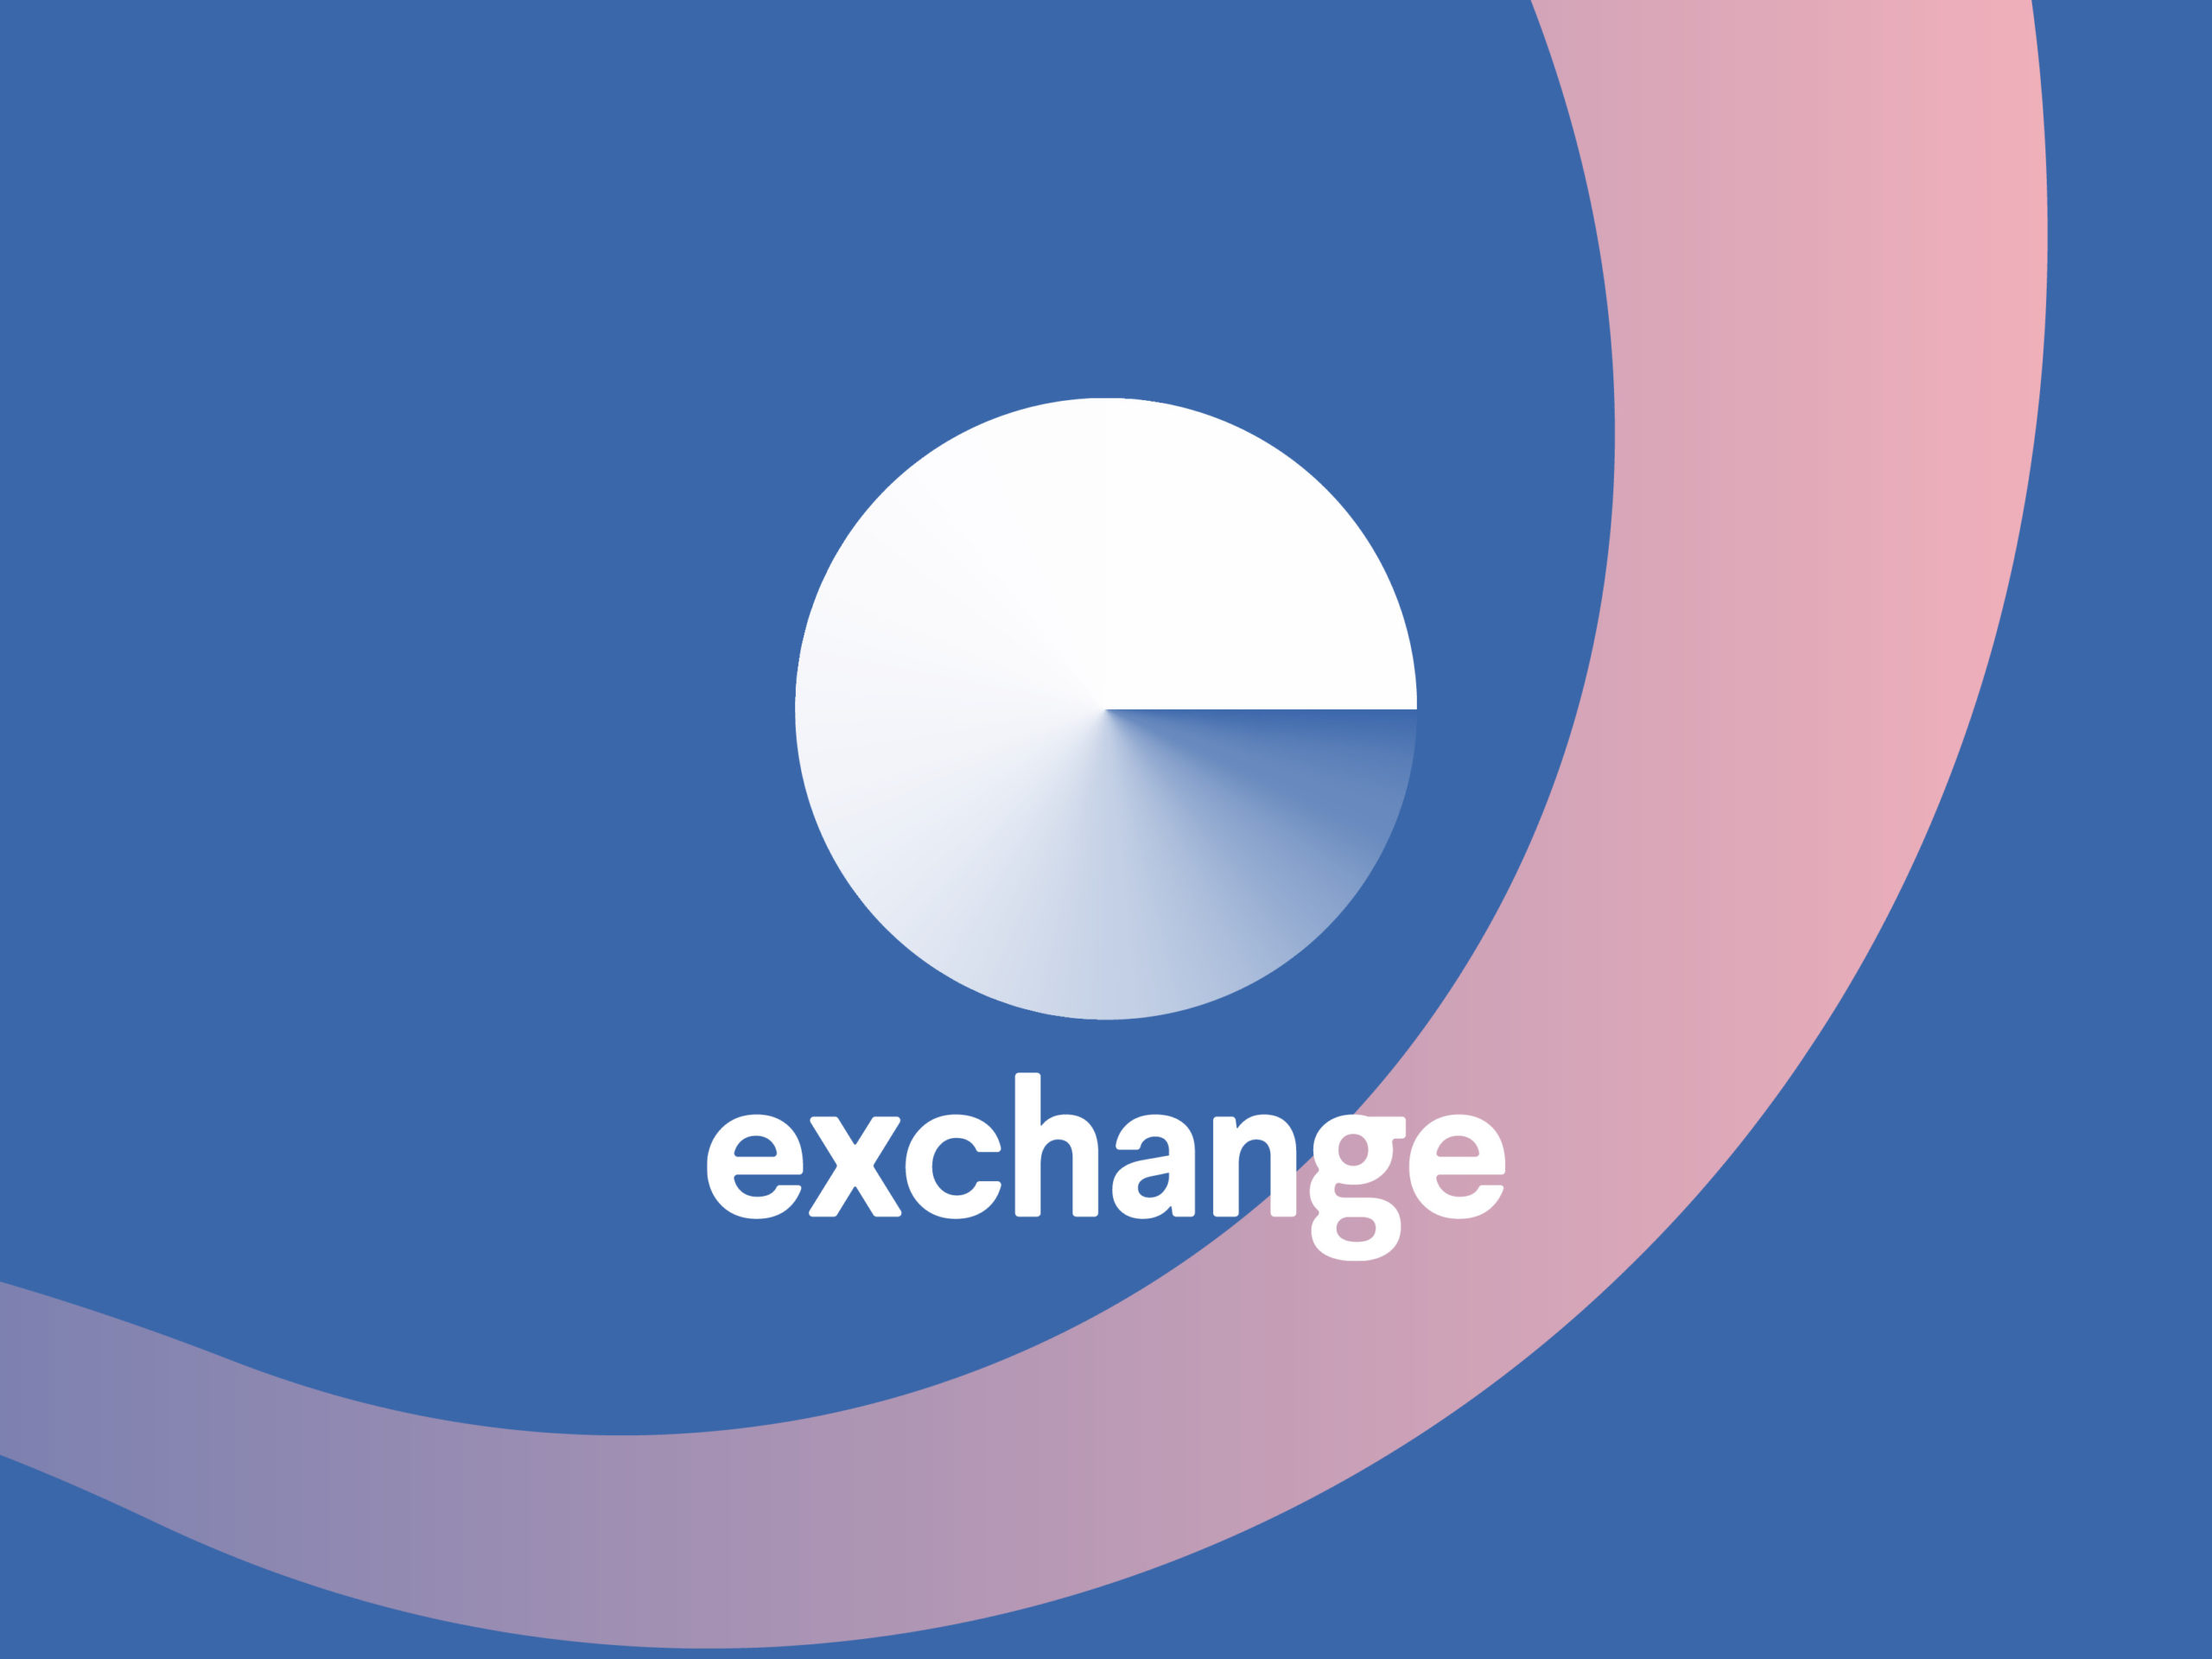 Exchange logo and name.